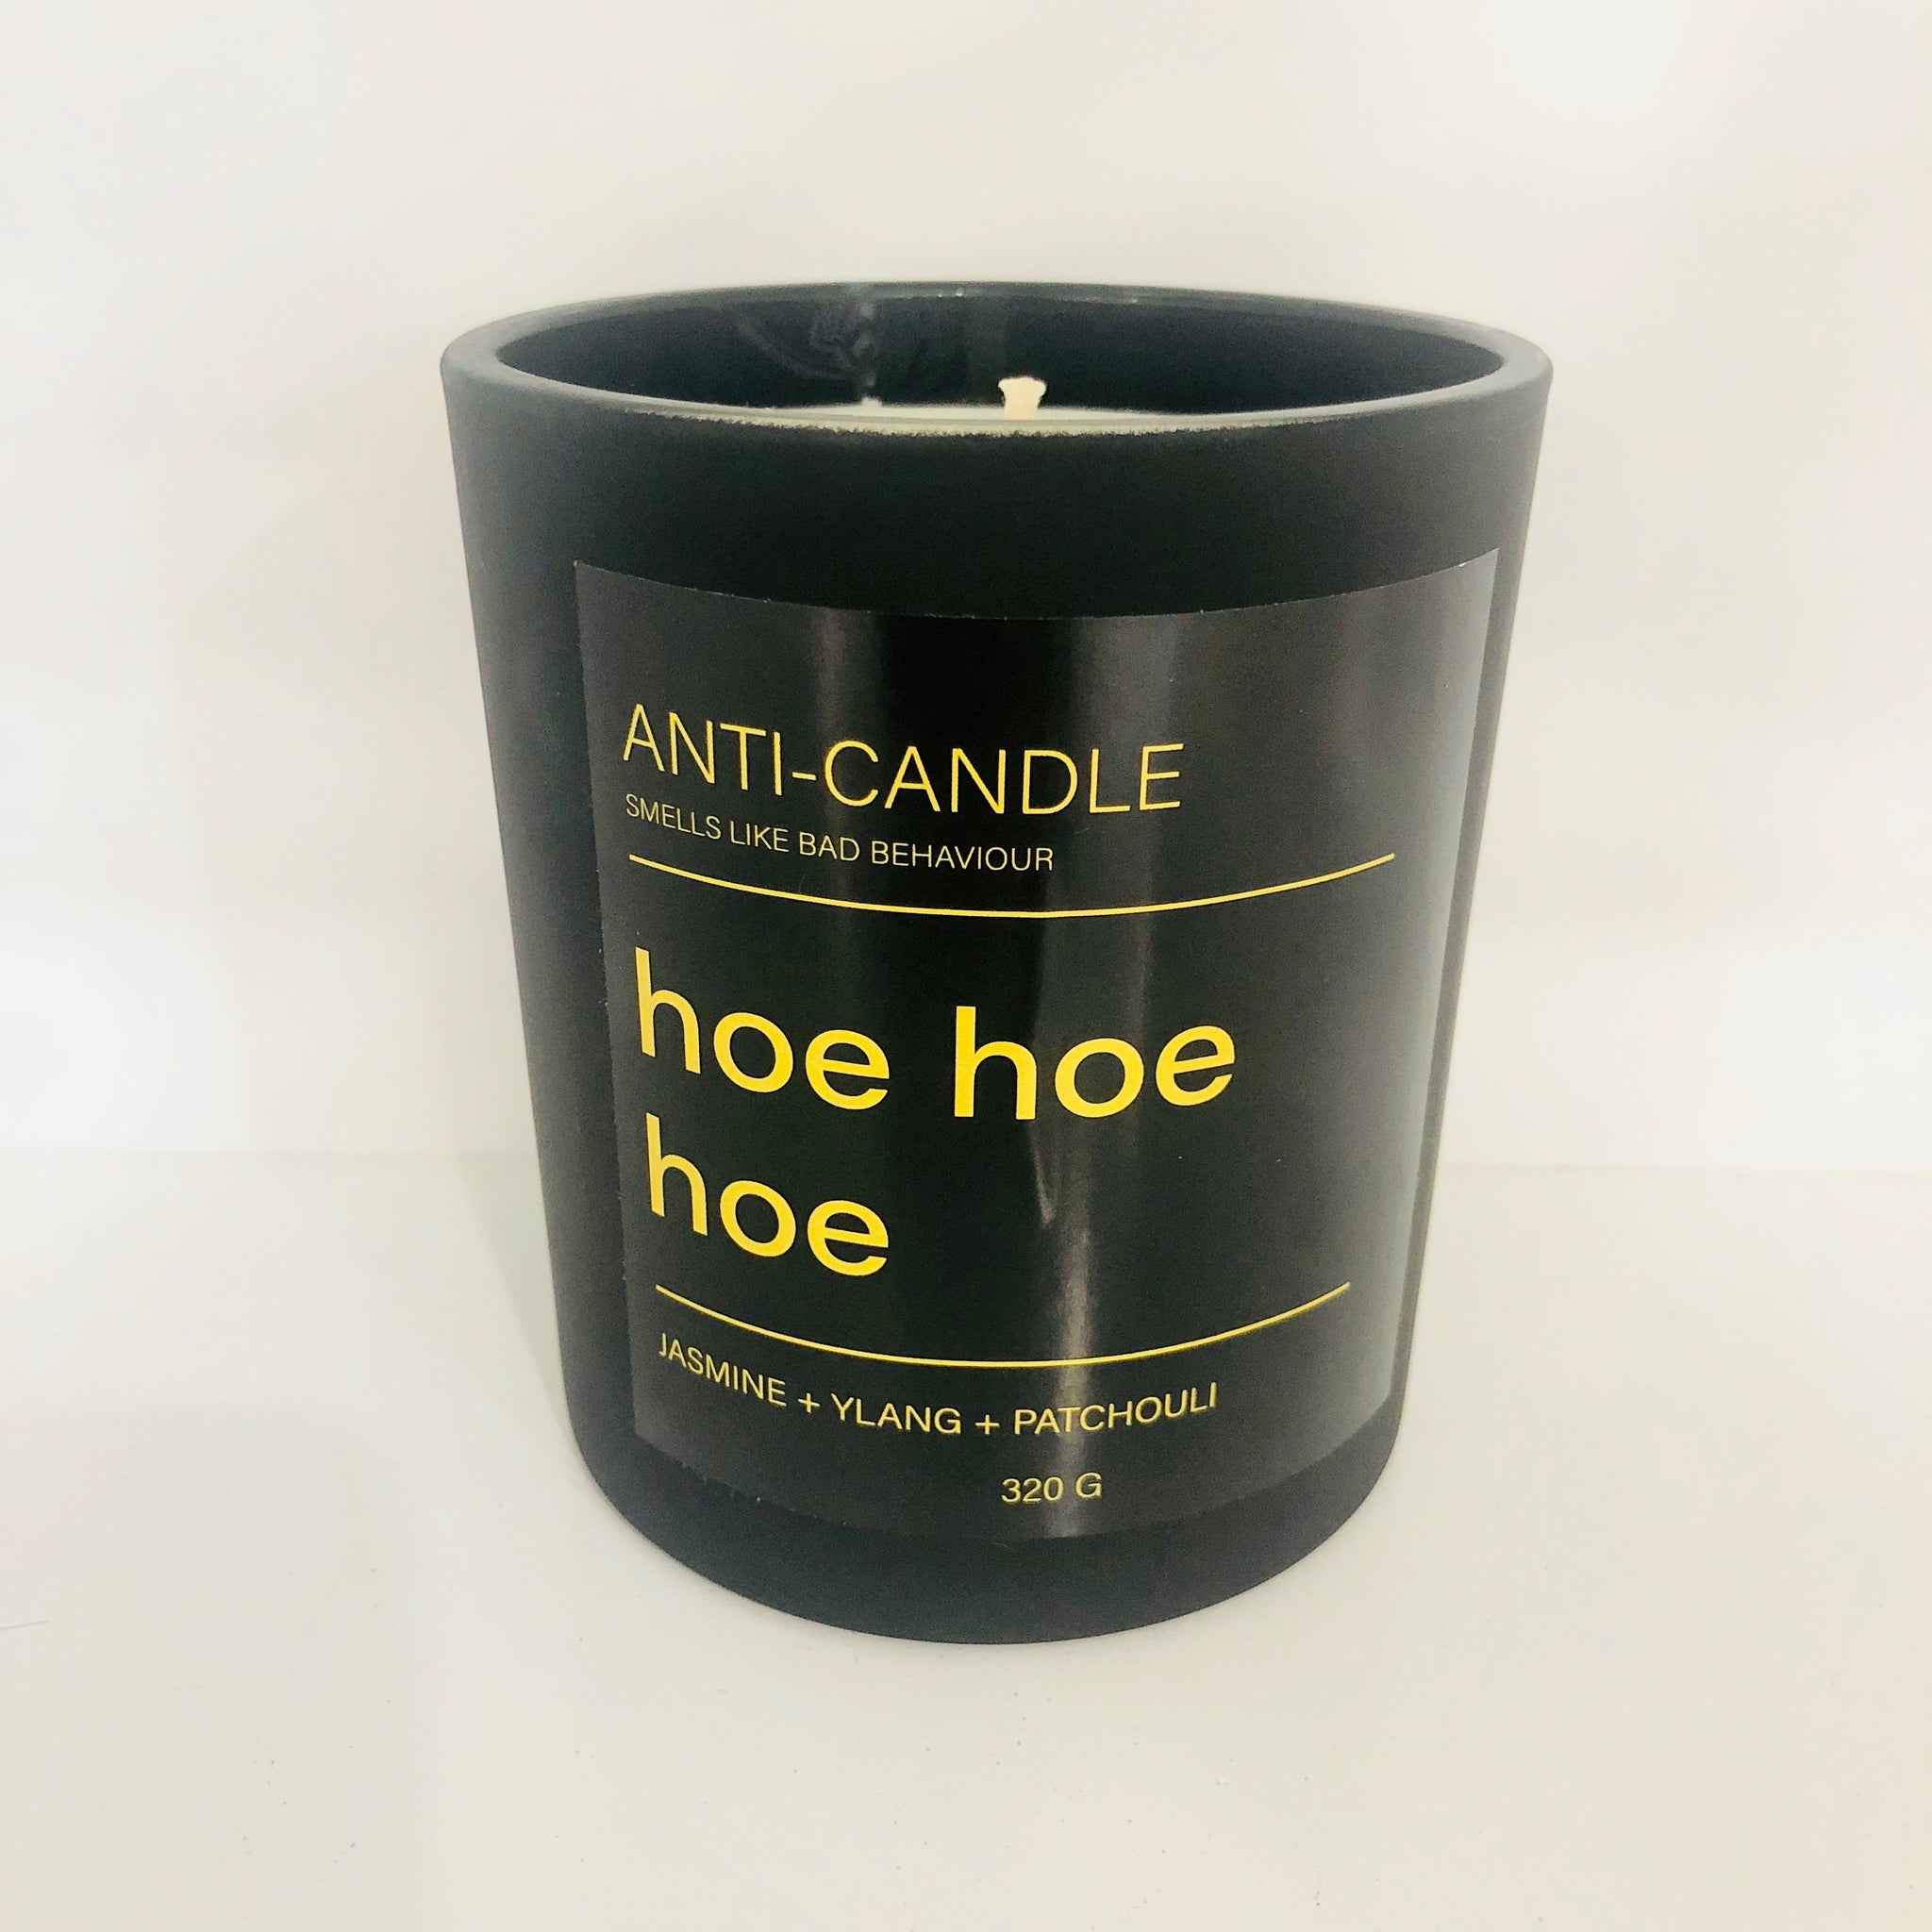 Anti-Candle Hoe Hoe Hoe